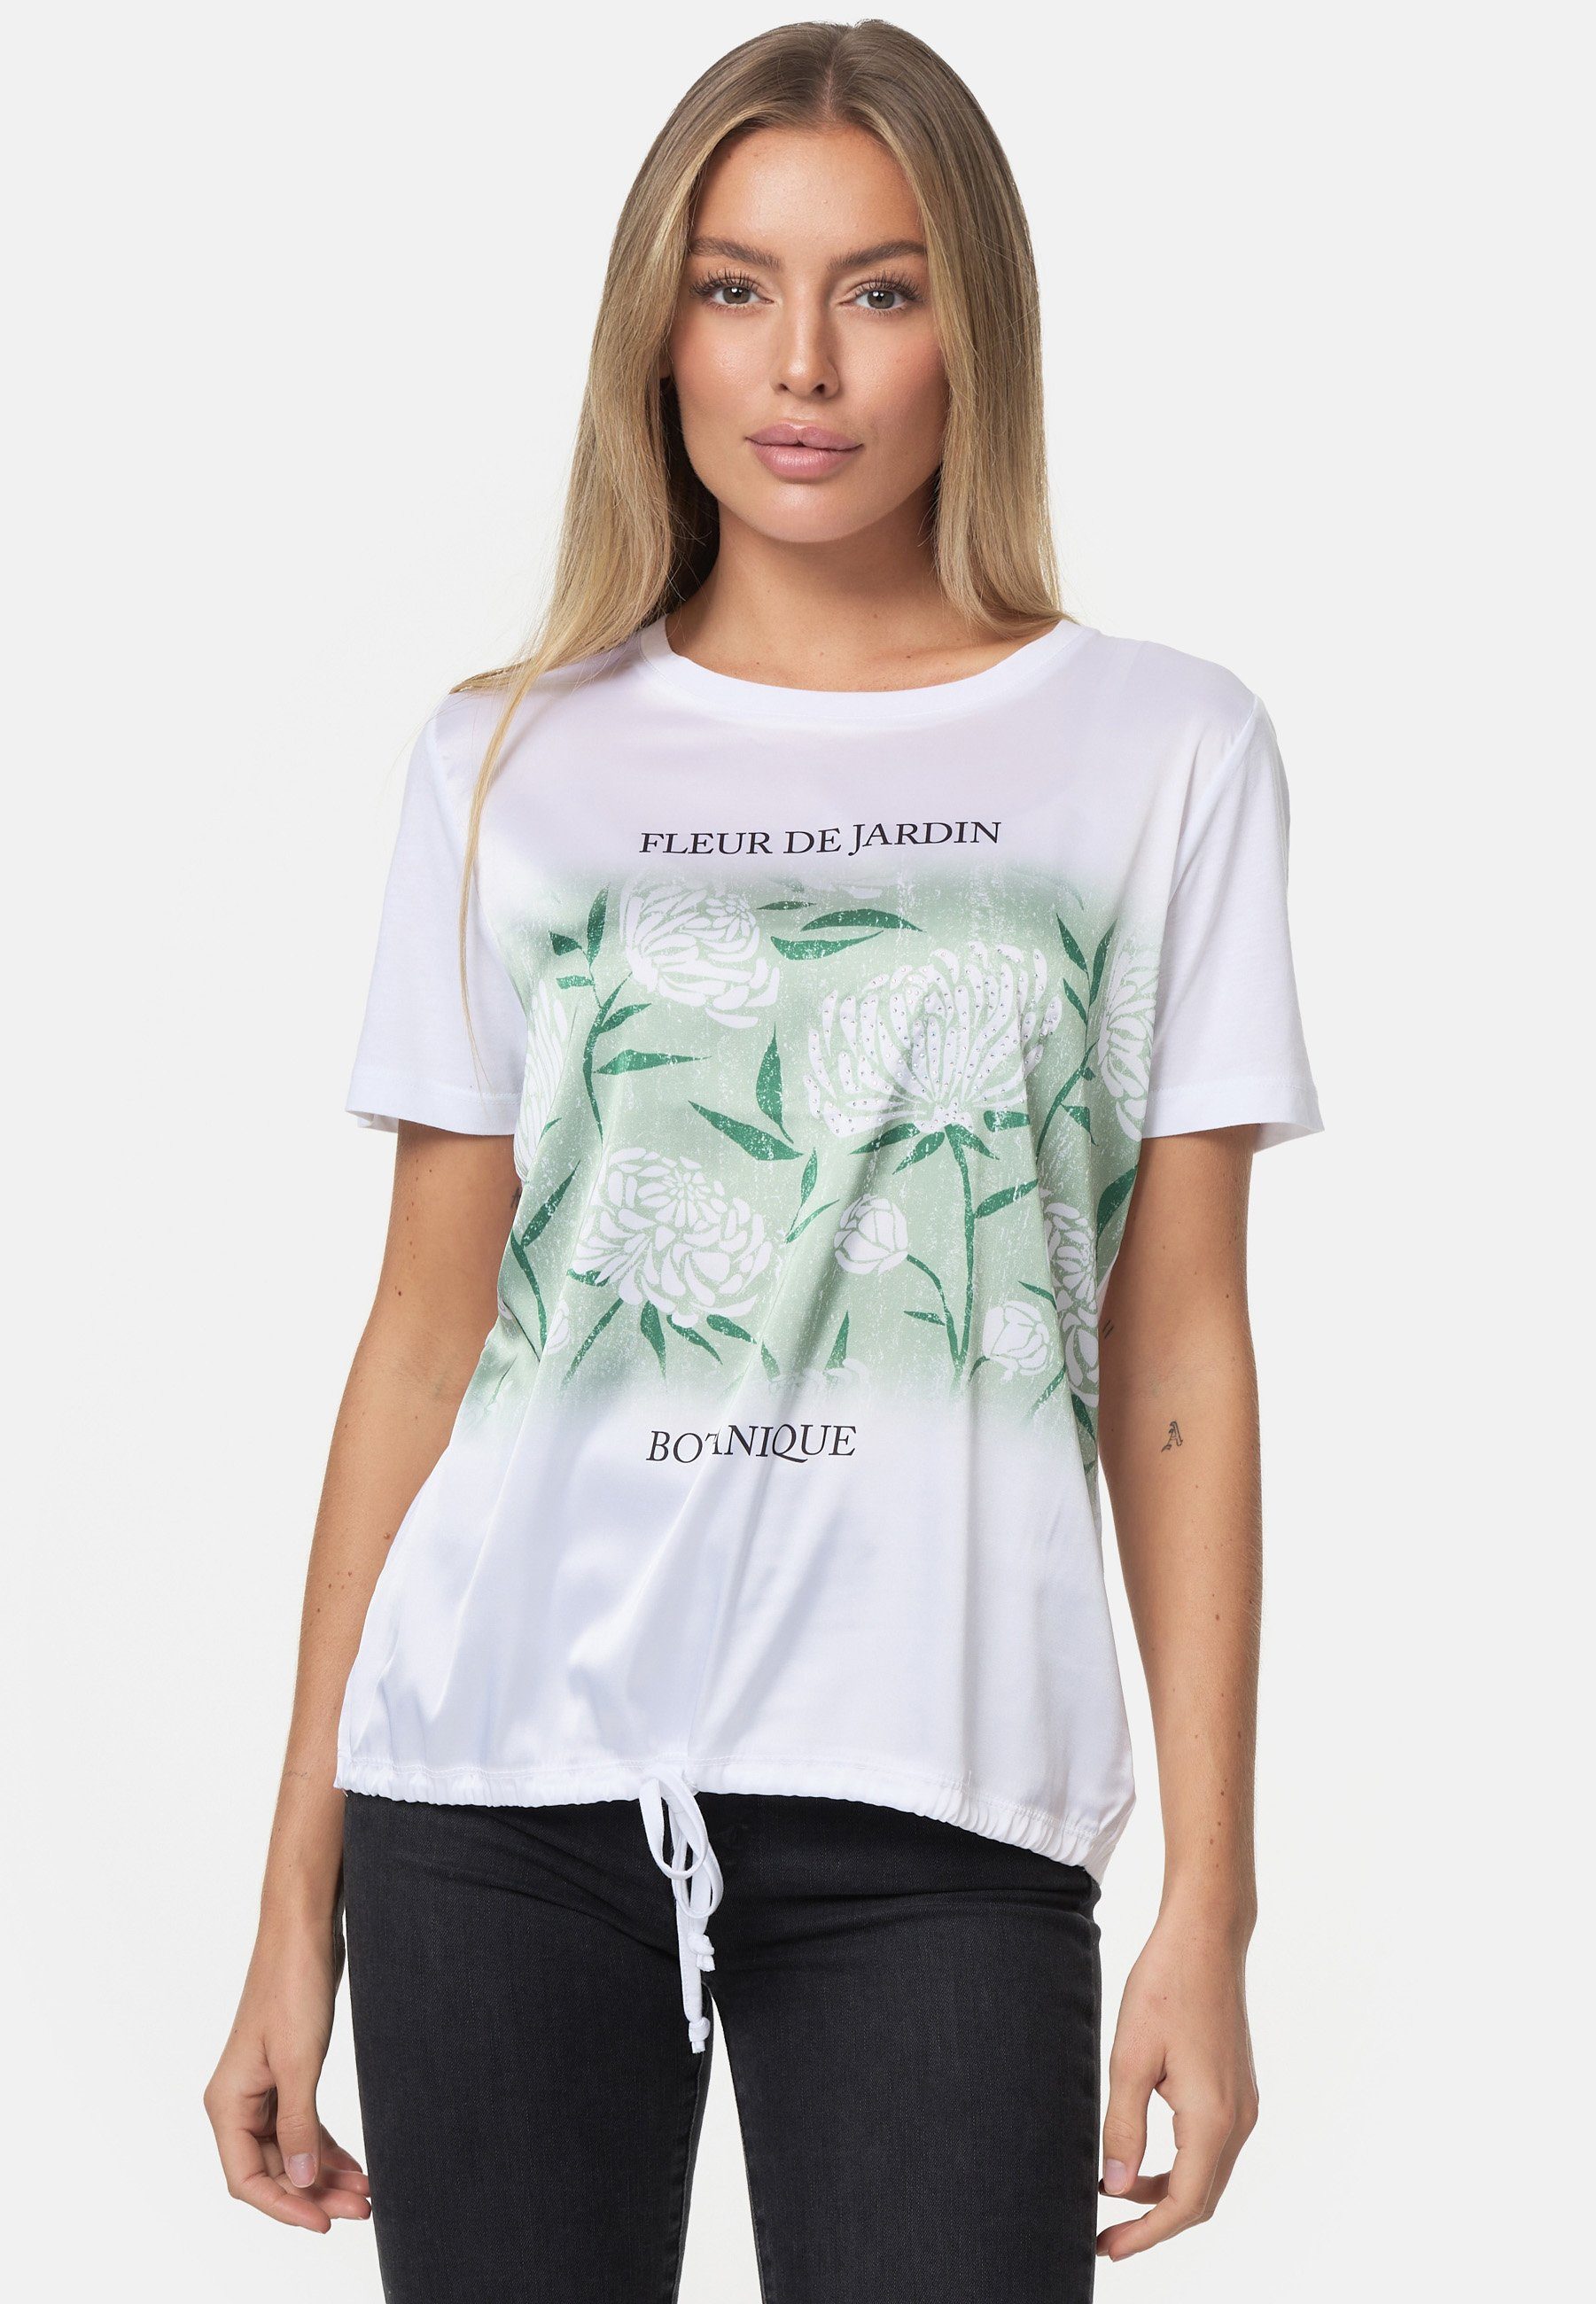 Decay T-Shirt mit schönem Frontprint weiß-grün | T-Shirts